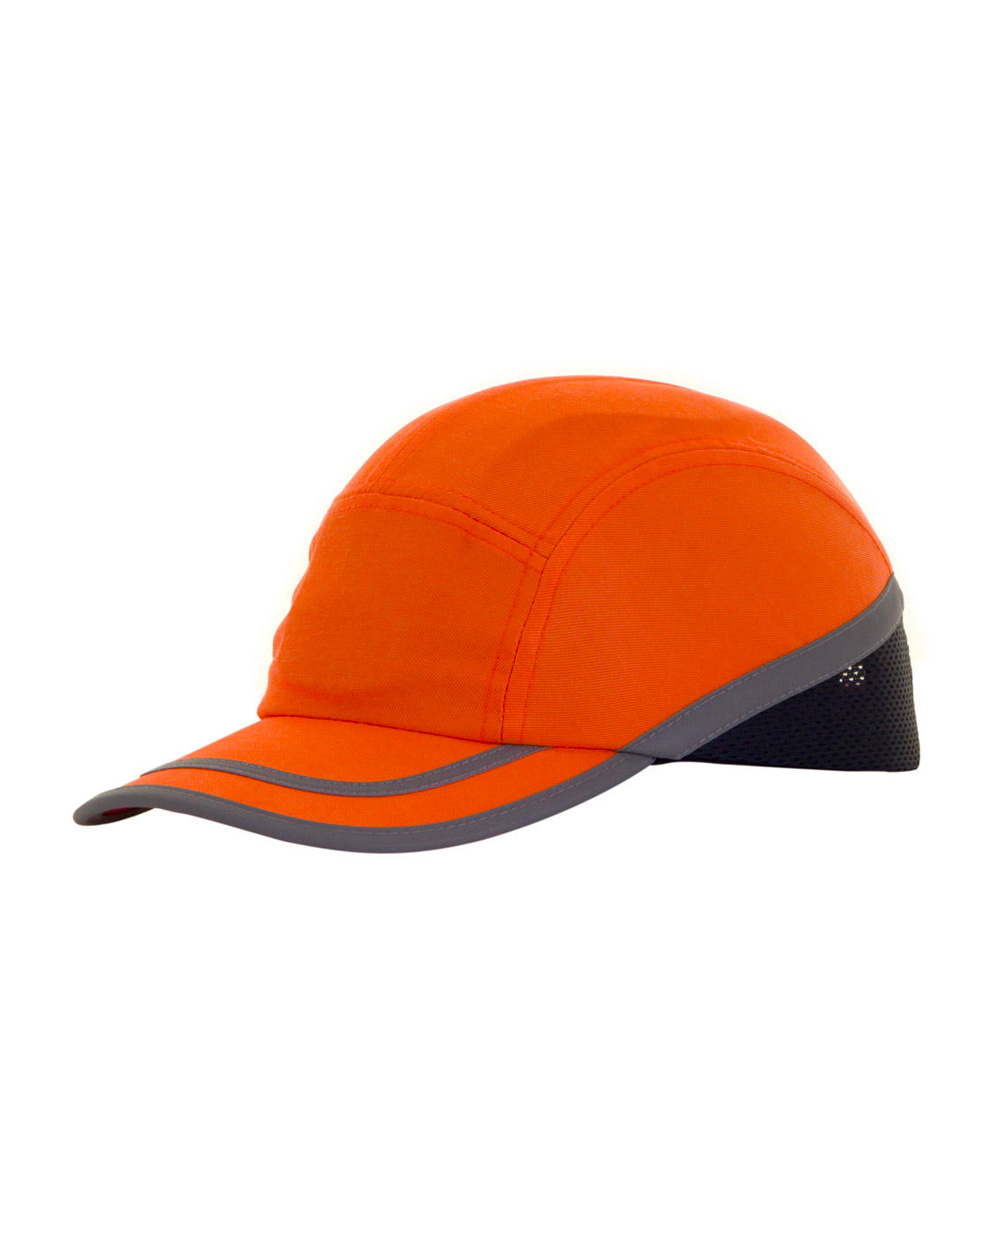 B-brand Sfty Baseball Cap With Retro Reflective Tape Orange